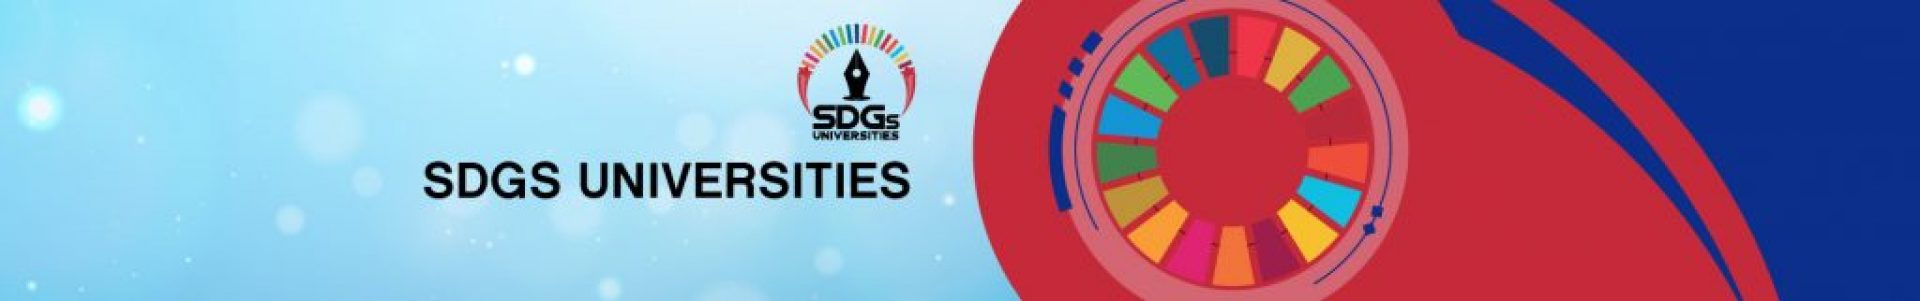 SDGs-Universities